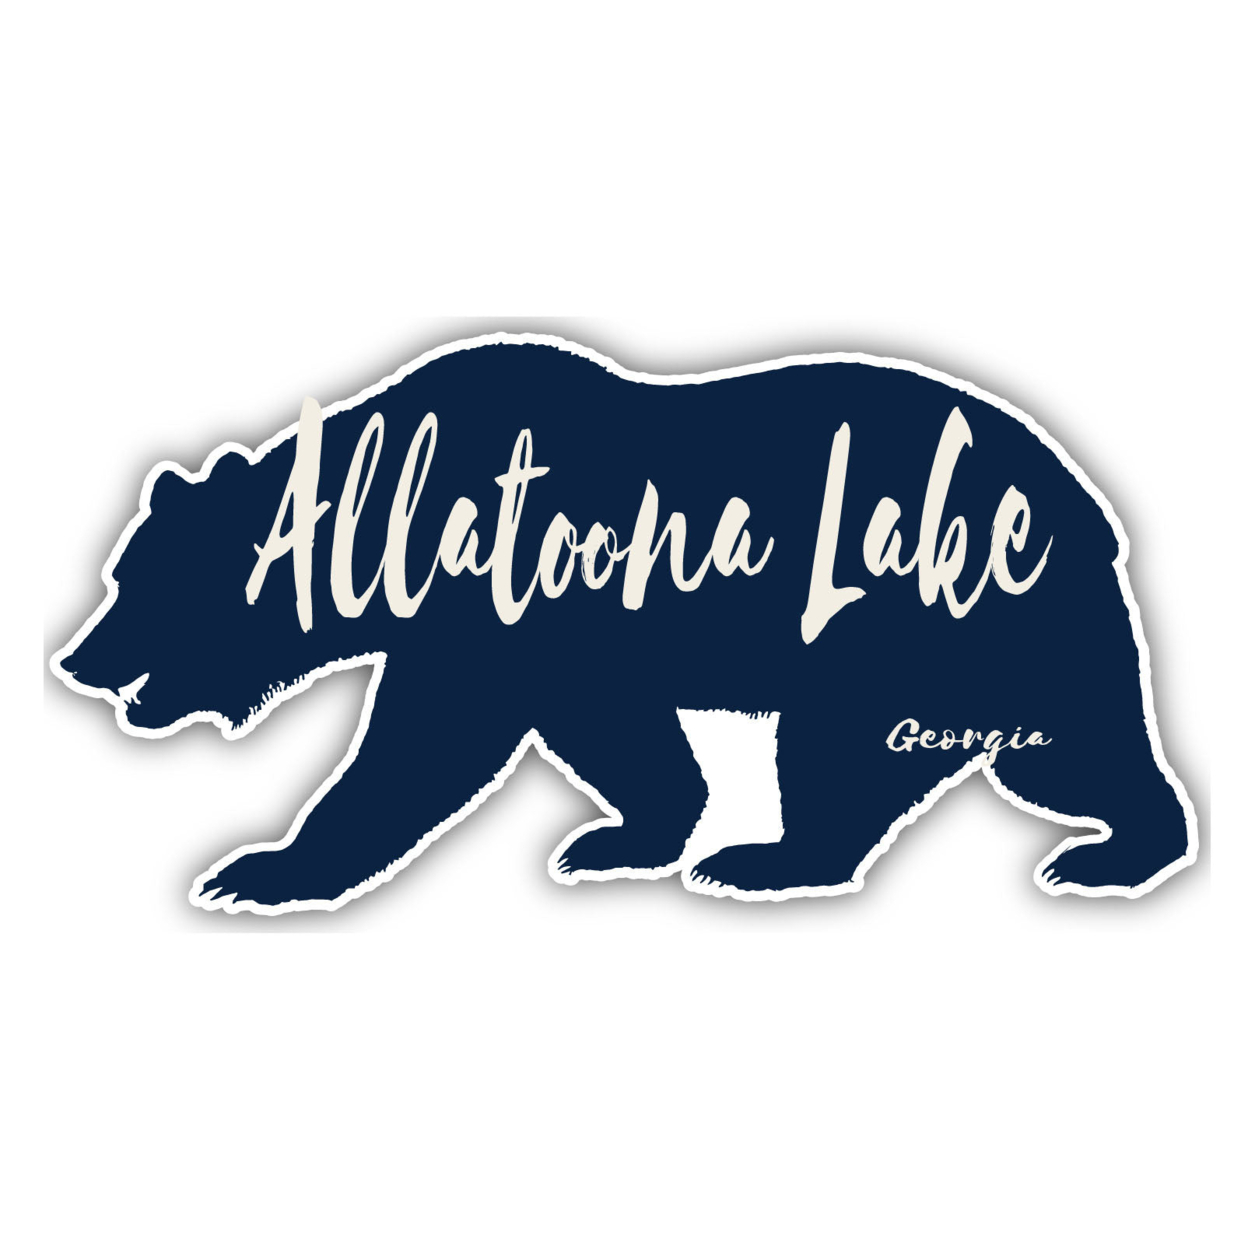 Allatoona Lake Georgia Souvenir Decorative Stickers (Choose Theme And Size) - 4-Pack, 6-Inch, Tent